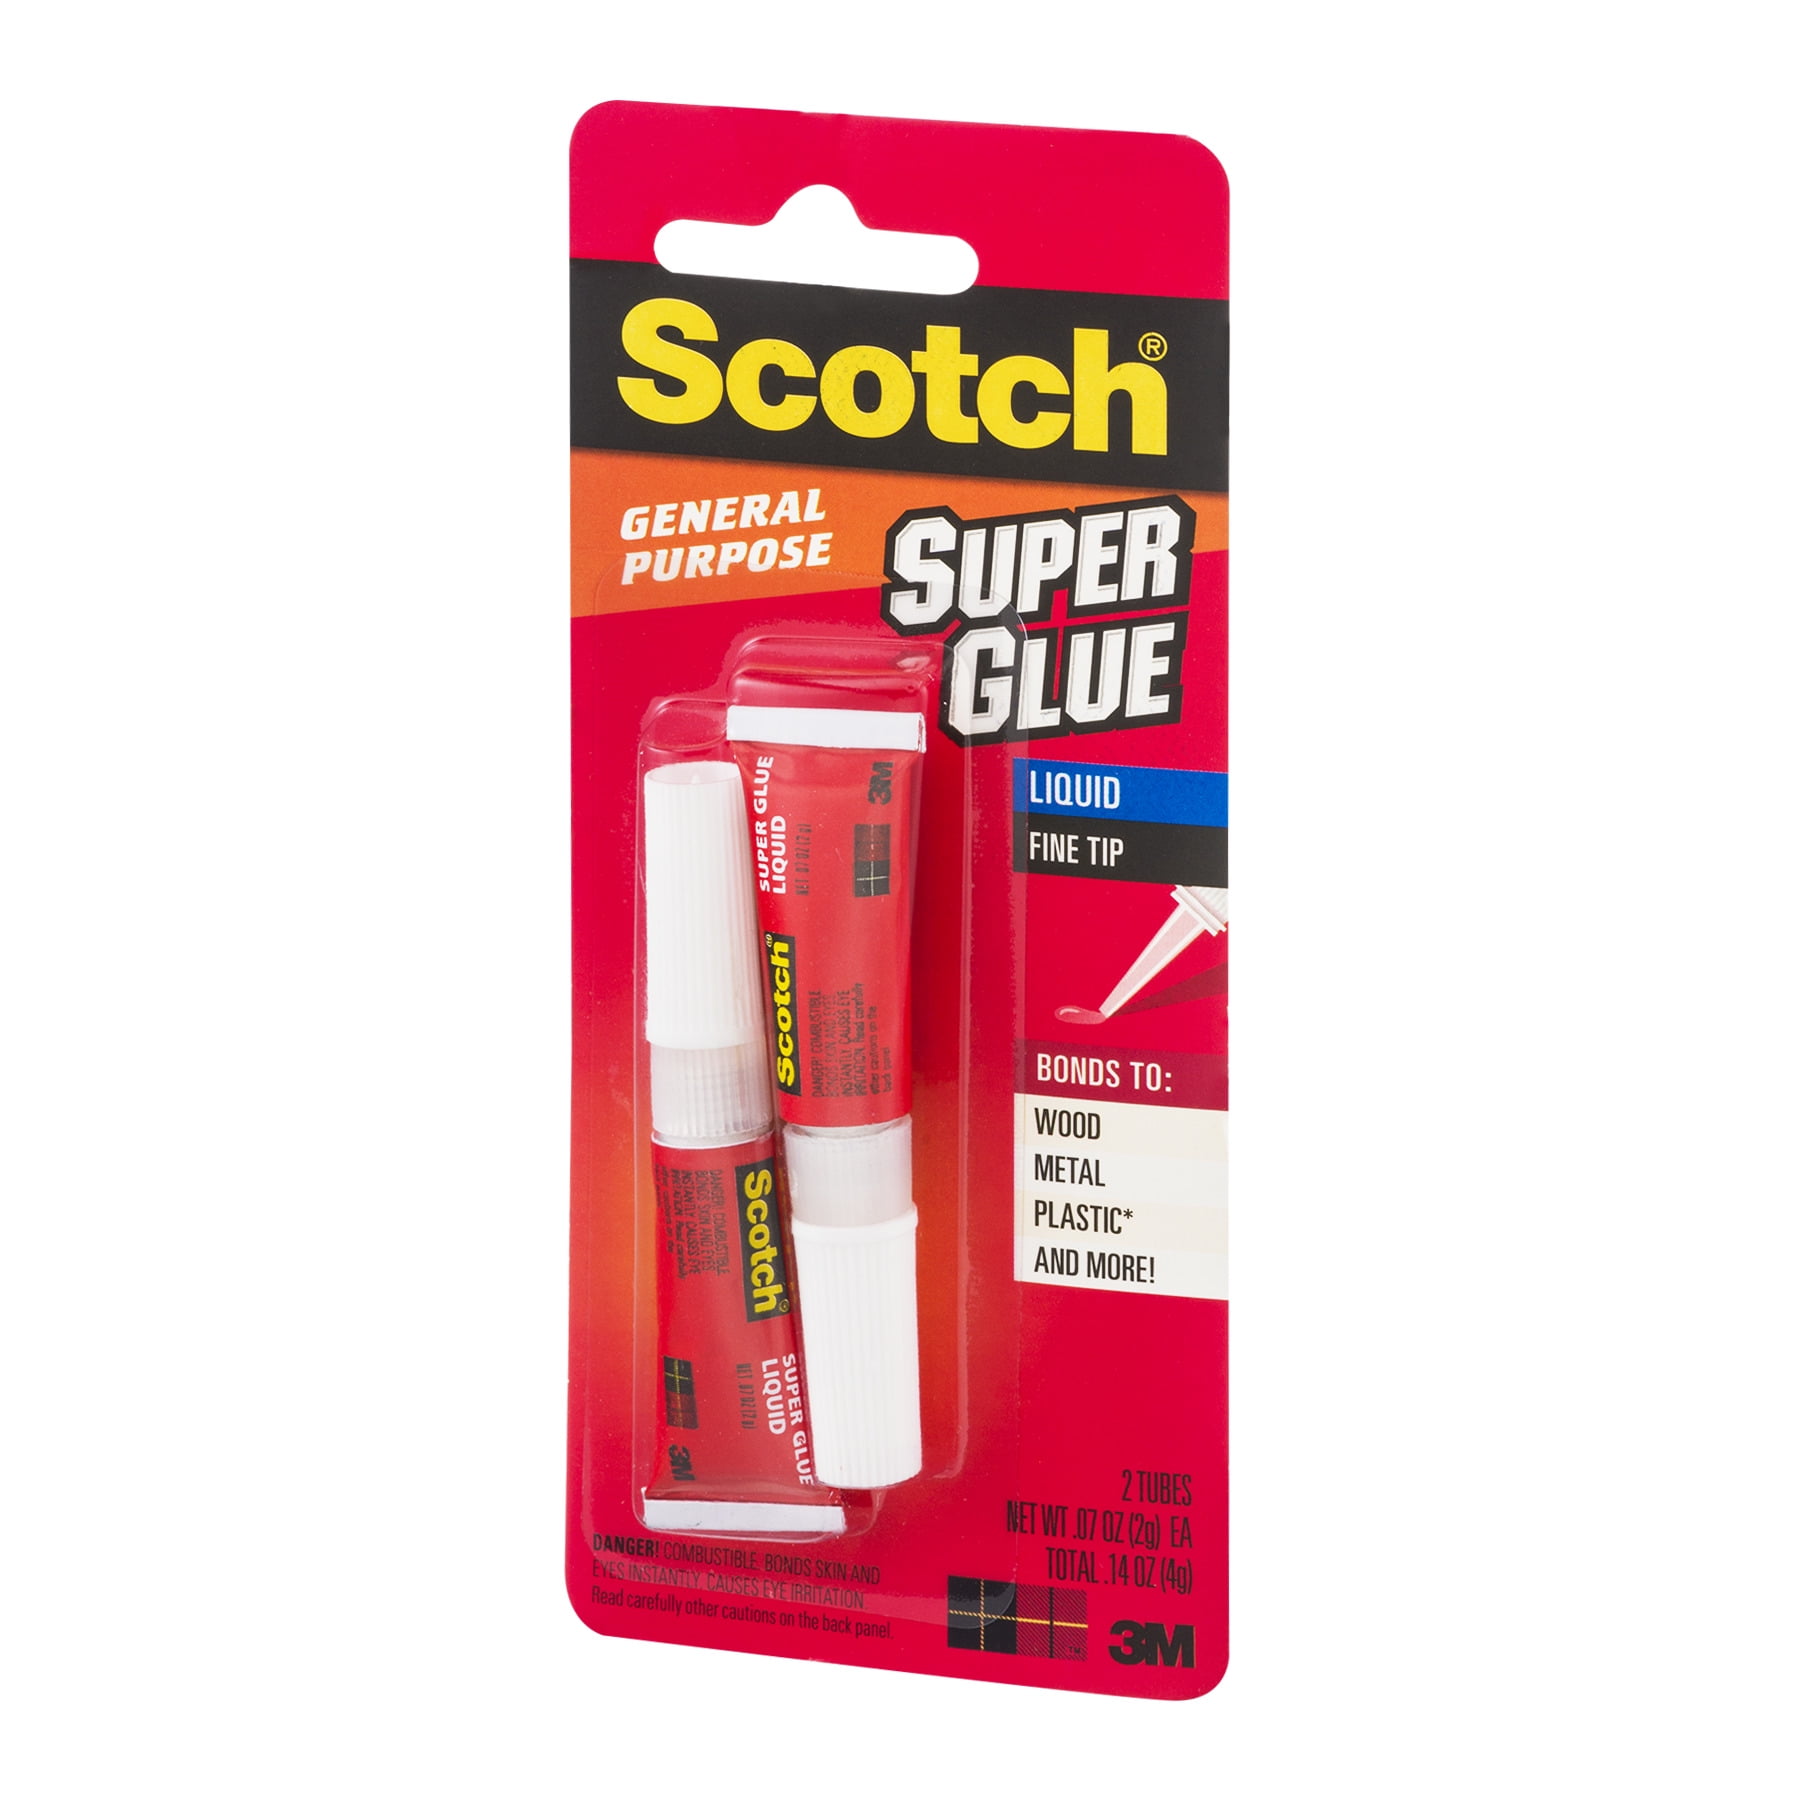 Scotch Super Glue Liquid, .07 Ounces (ad114), 6 Pack